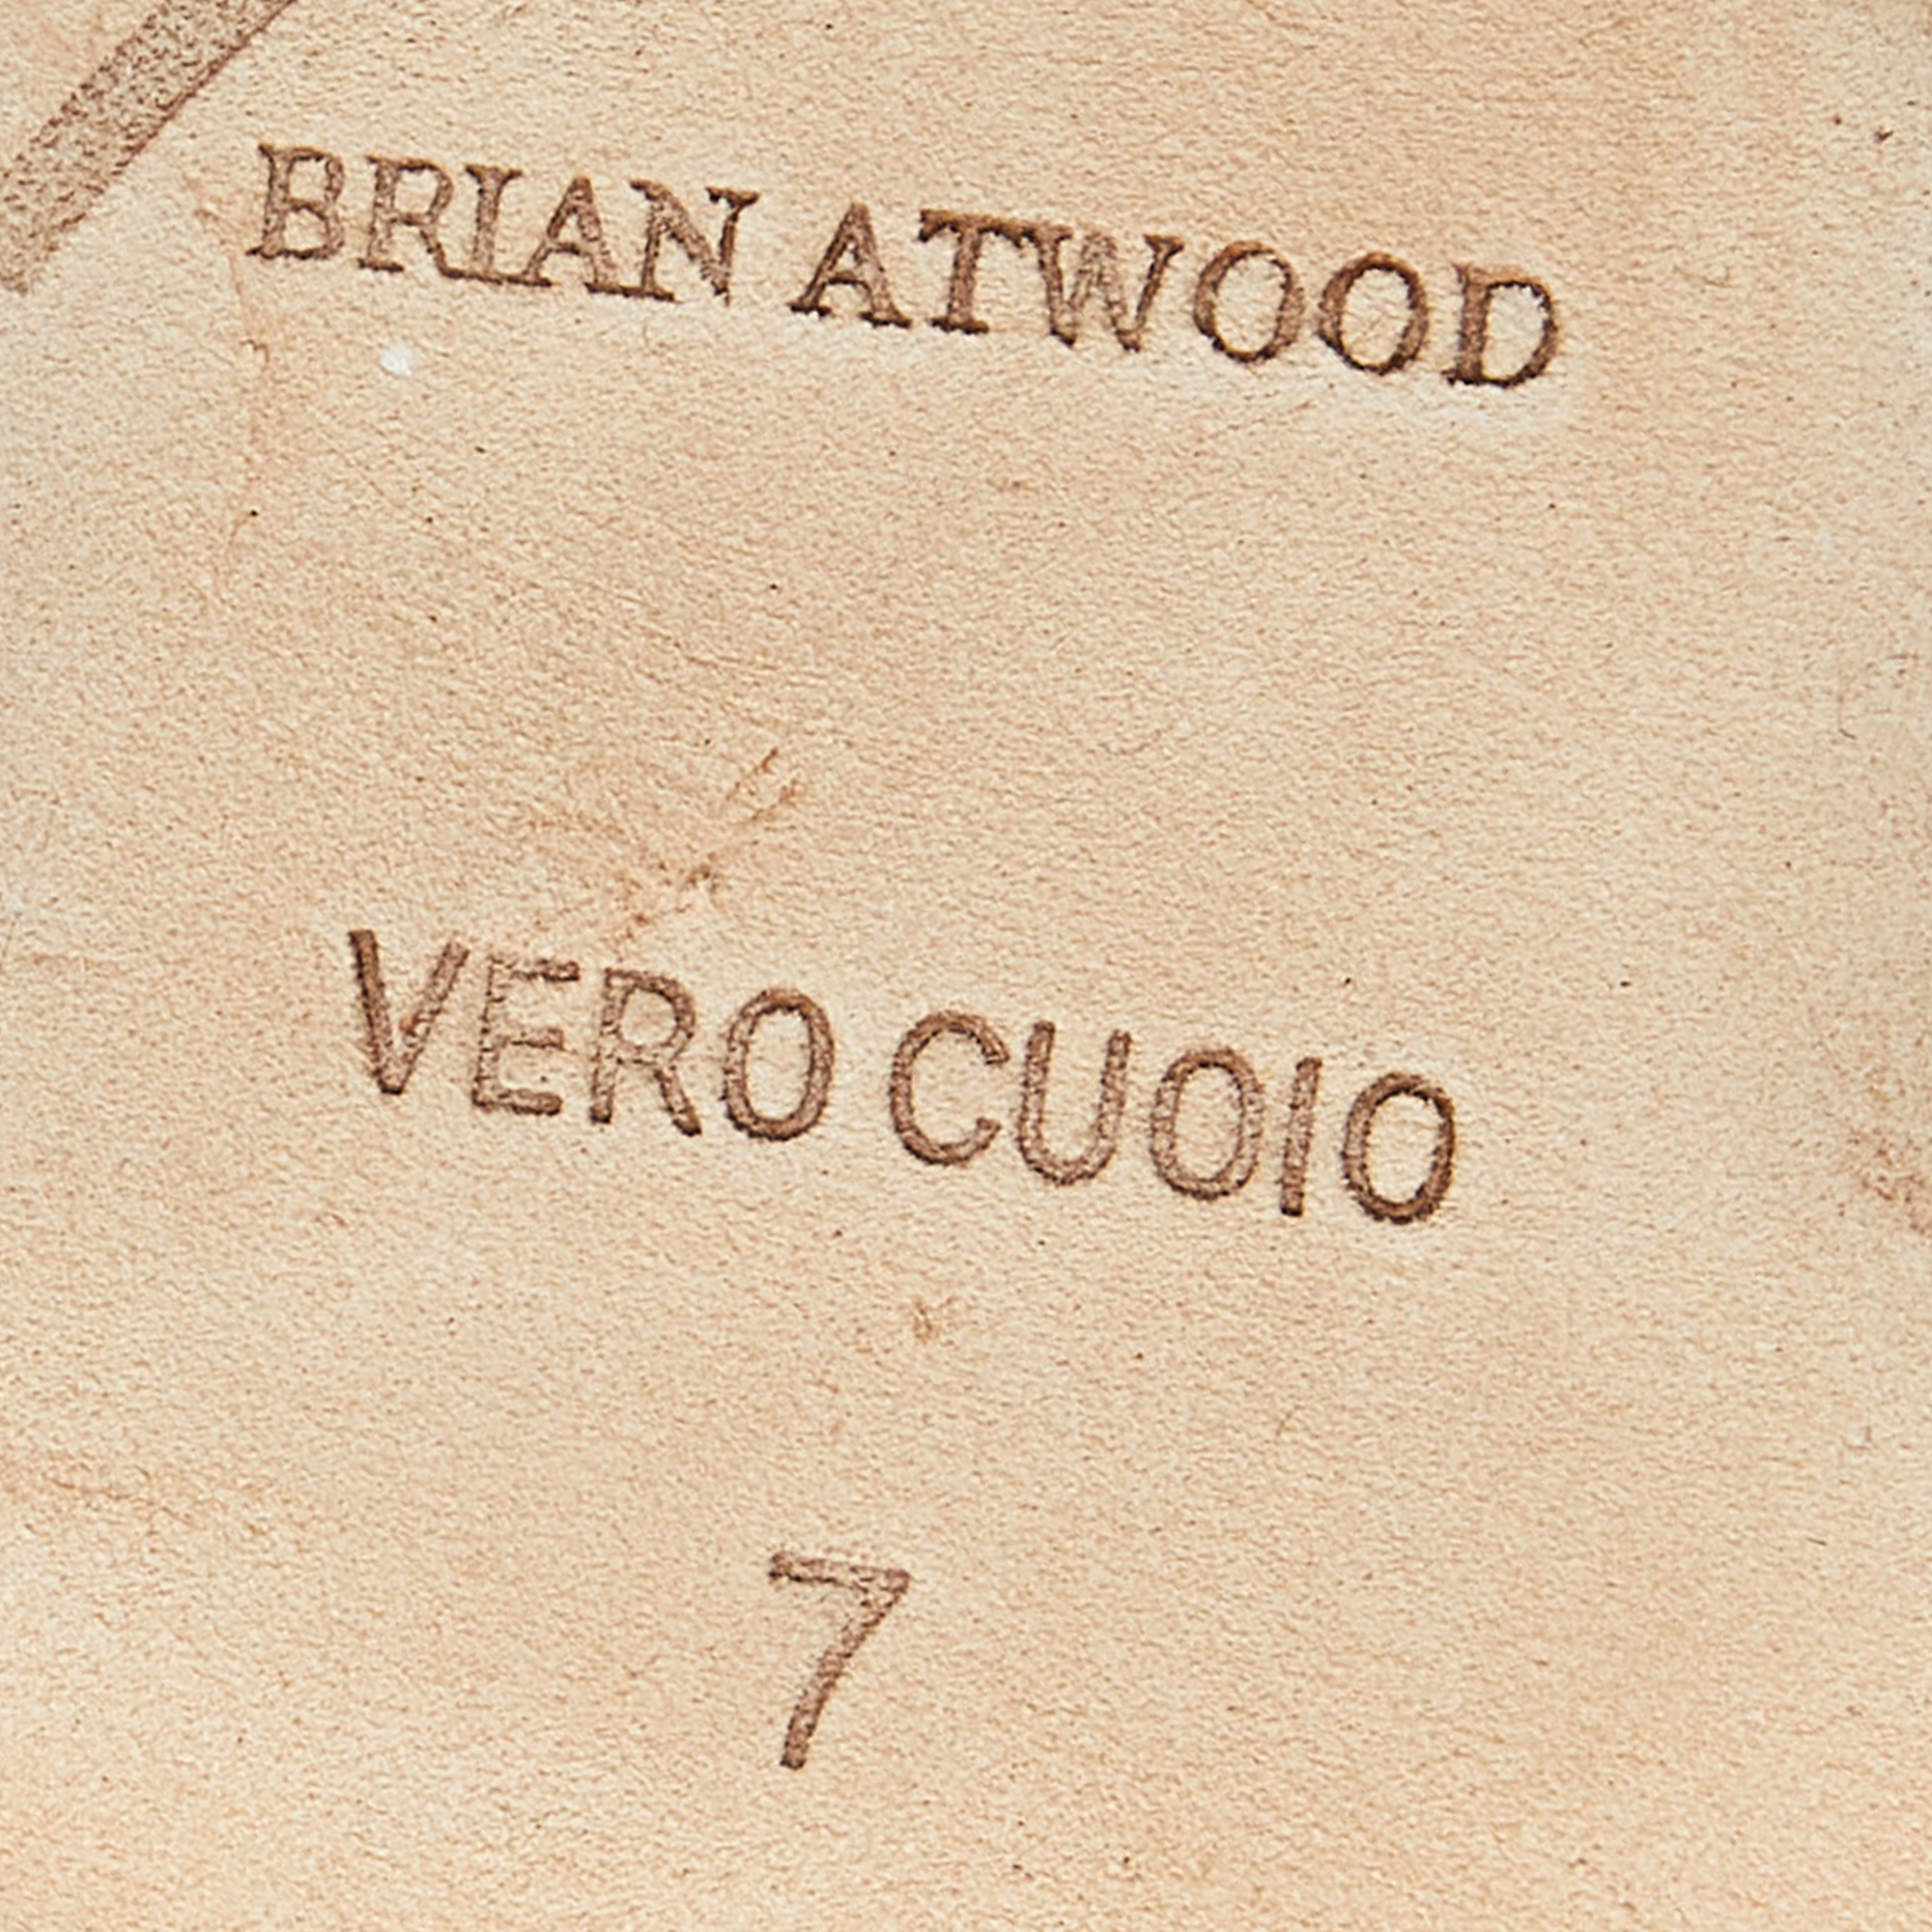 Brian Atwood Holographic Lurex Fabric Platform Pumps Size 37.5